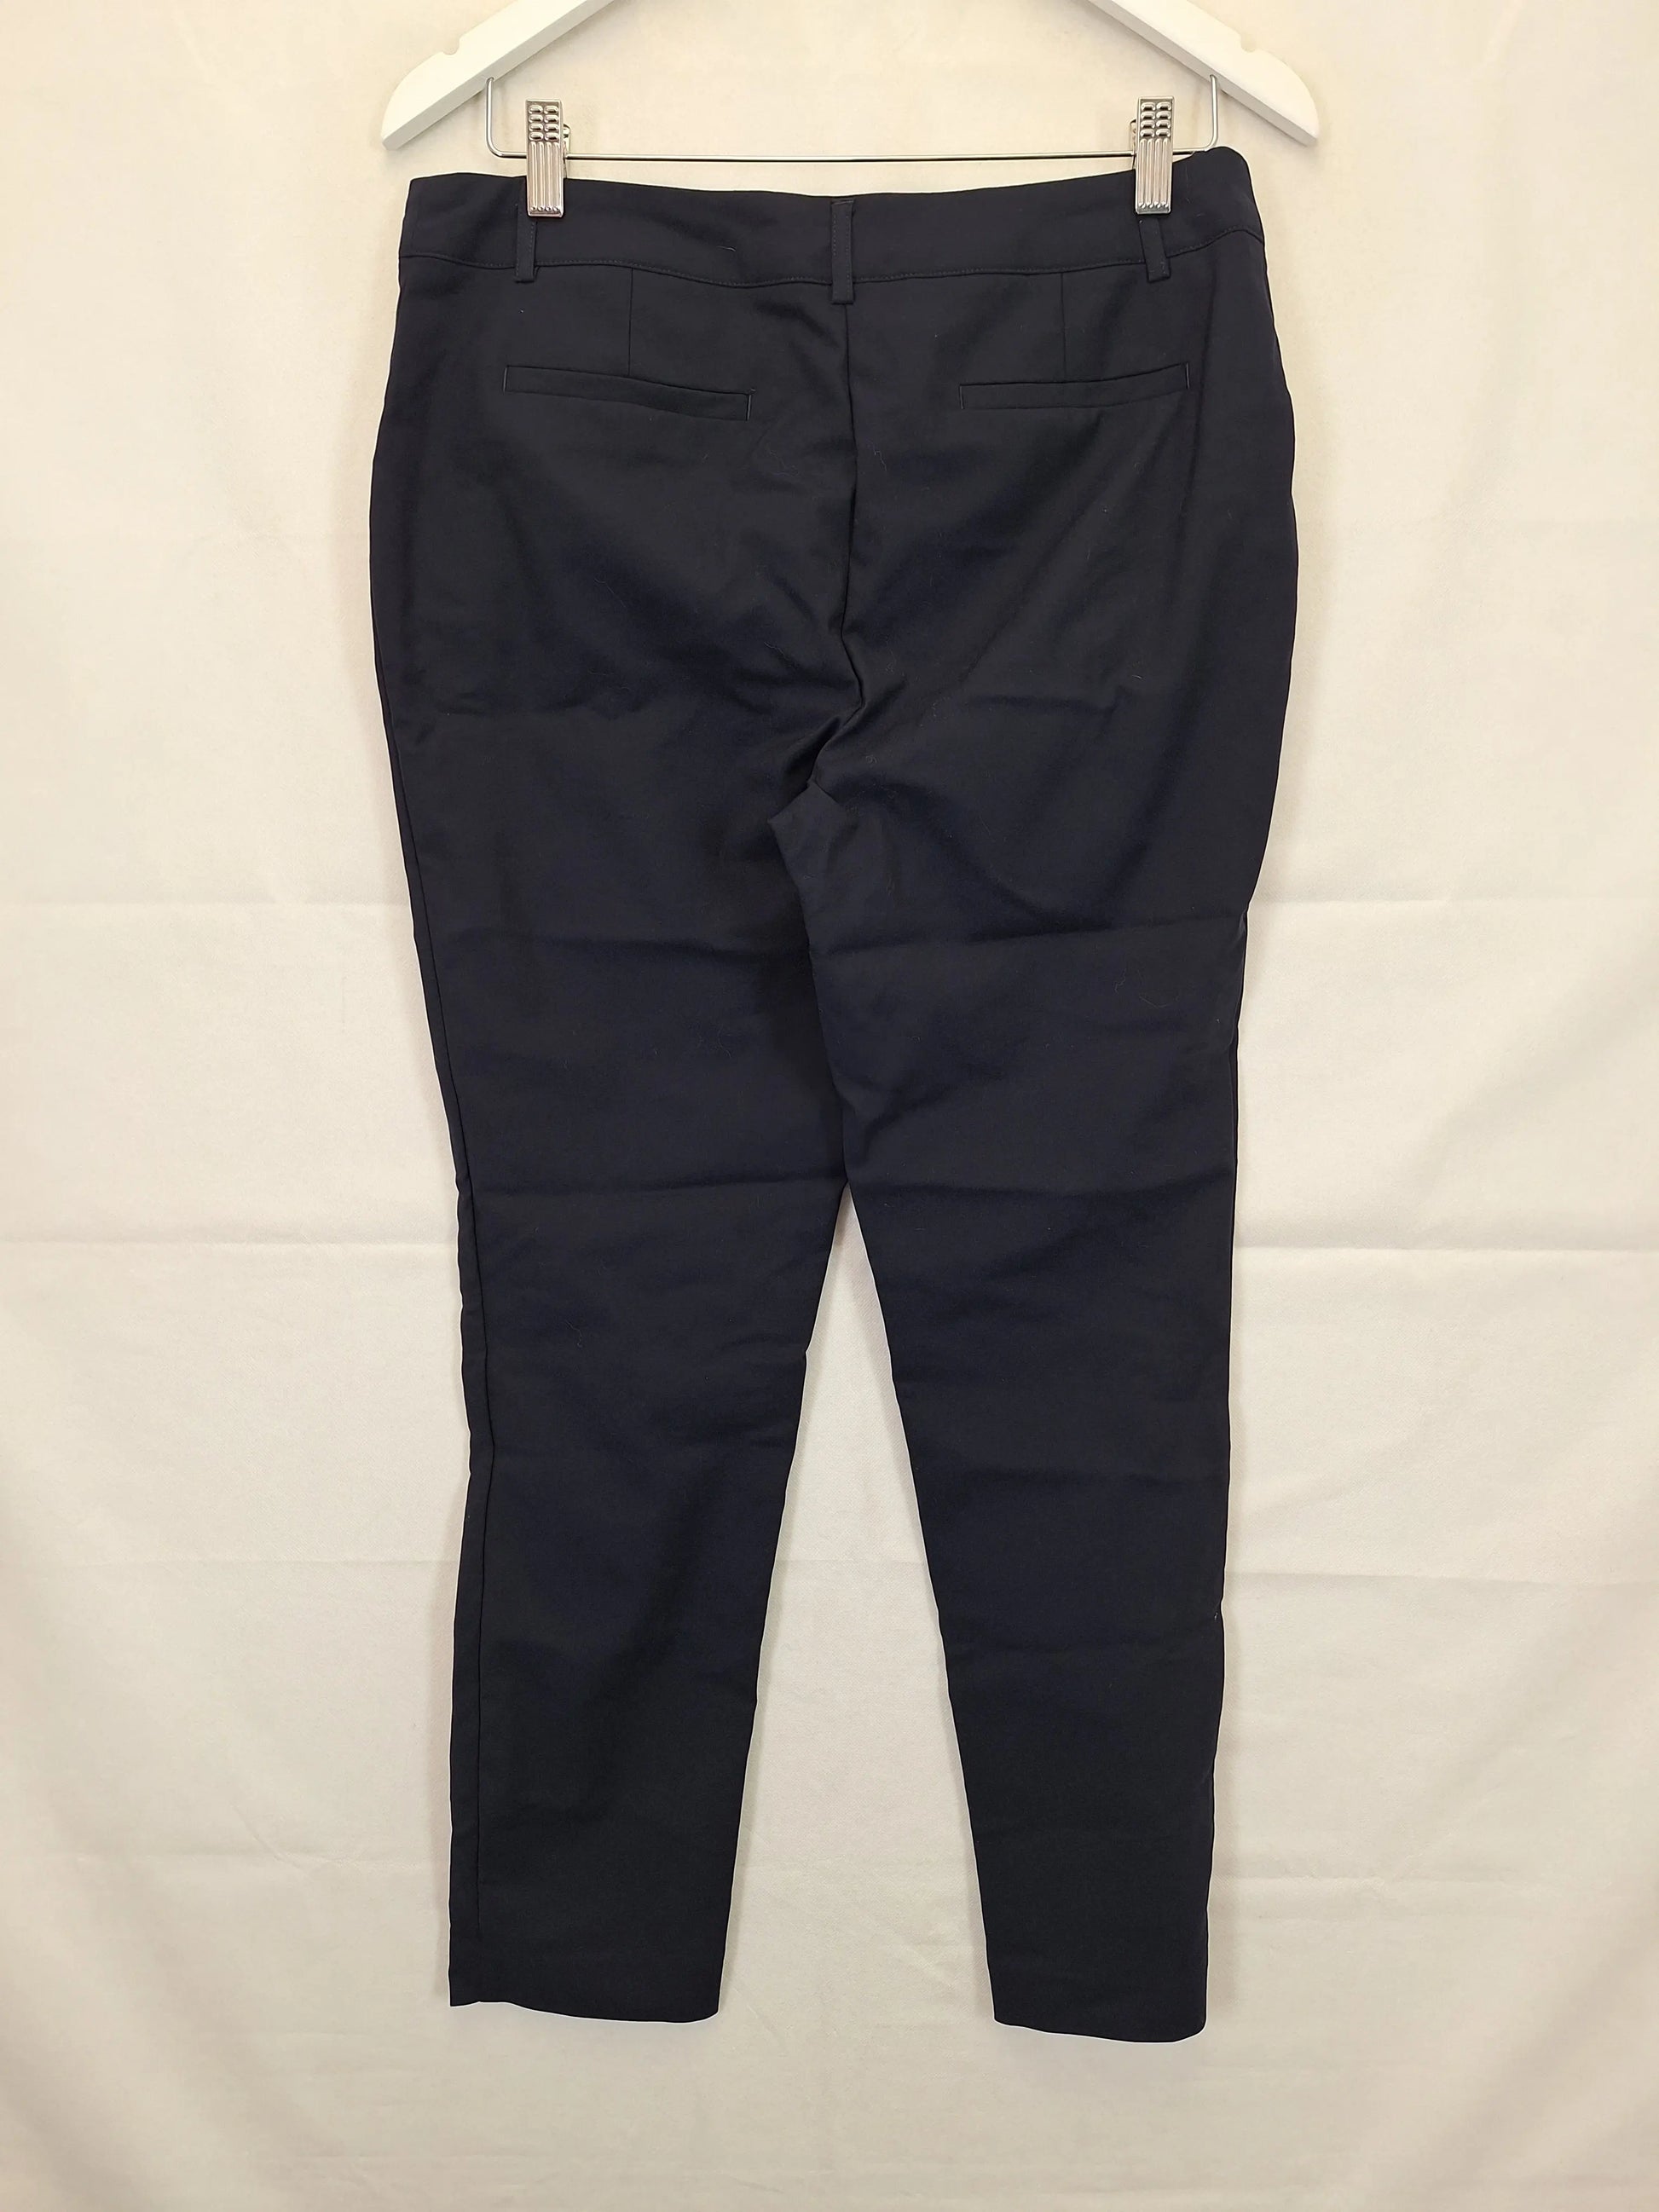 Jacqui E Navy Work Pants Size 10 – SwapUp